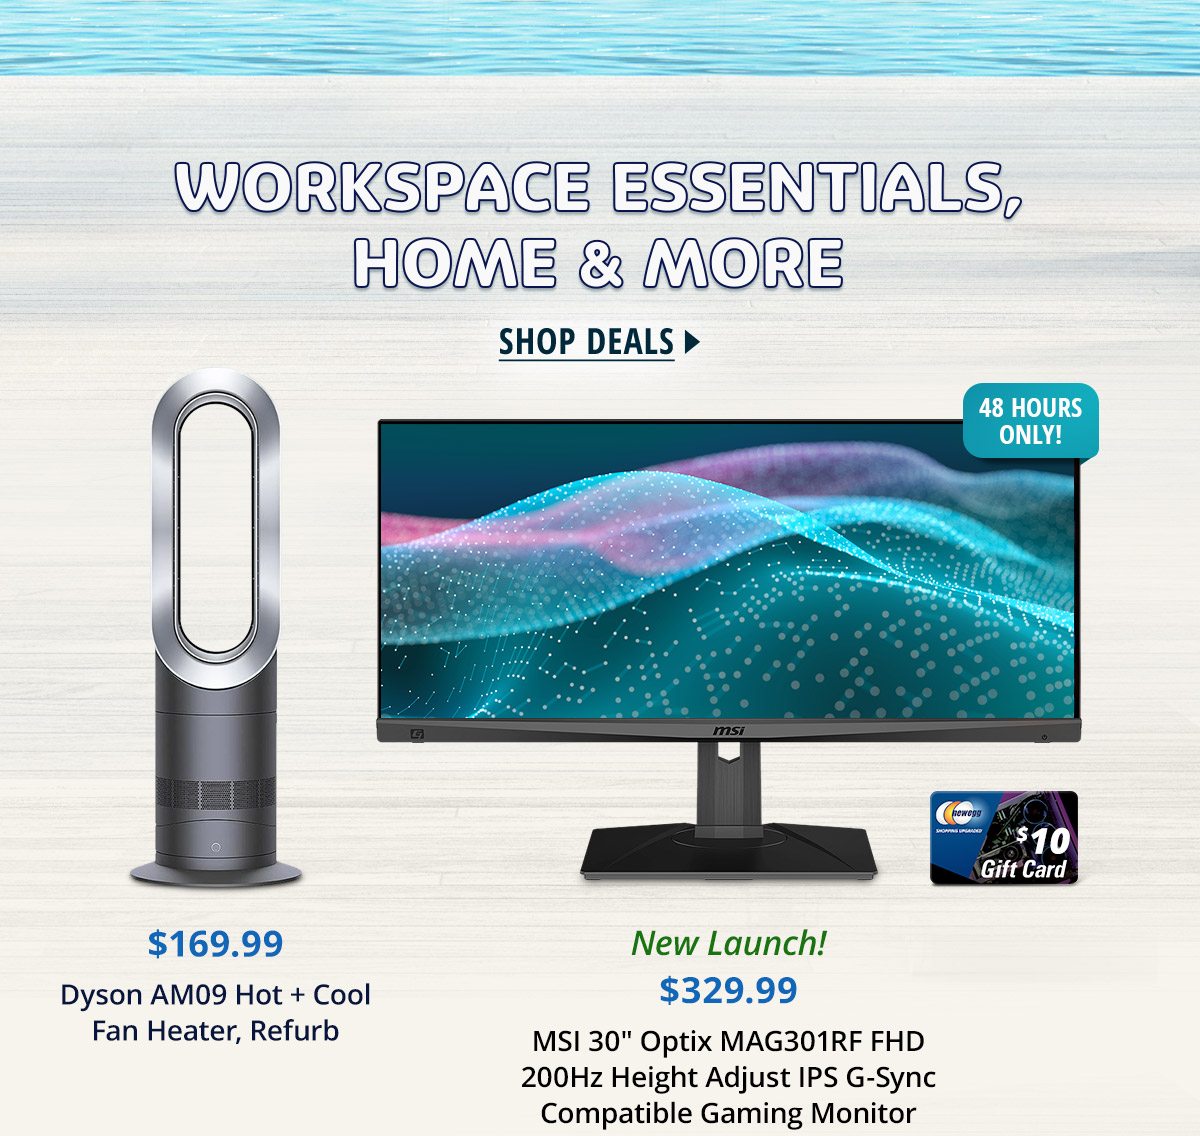 Workspace Essentials, Home & More